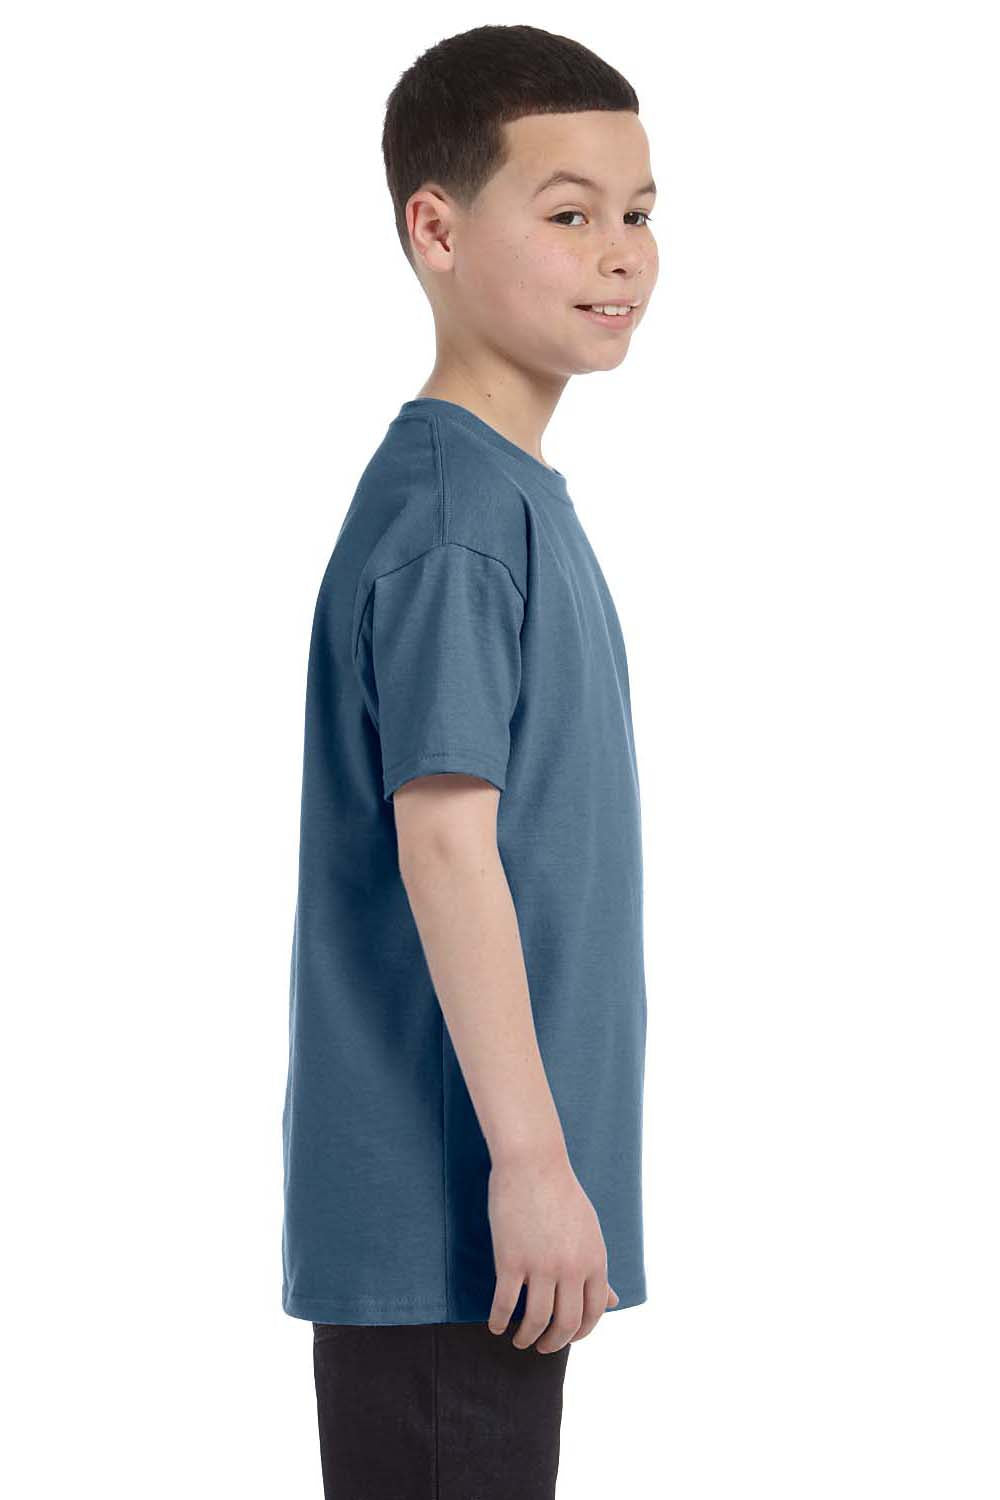 Hanes 54500 Youth ComfortSoft Short Sleeve Crewneck T-Shirt Denim Blue Side